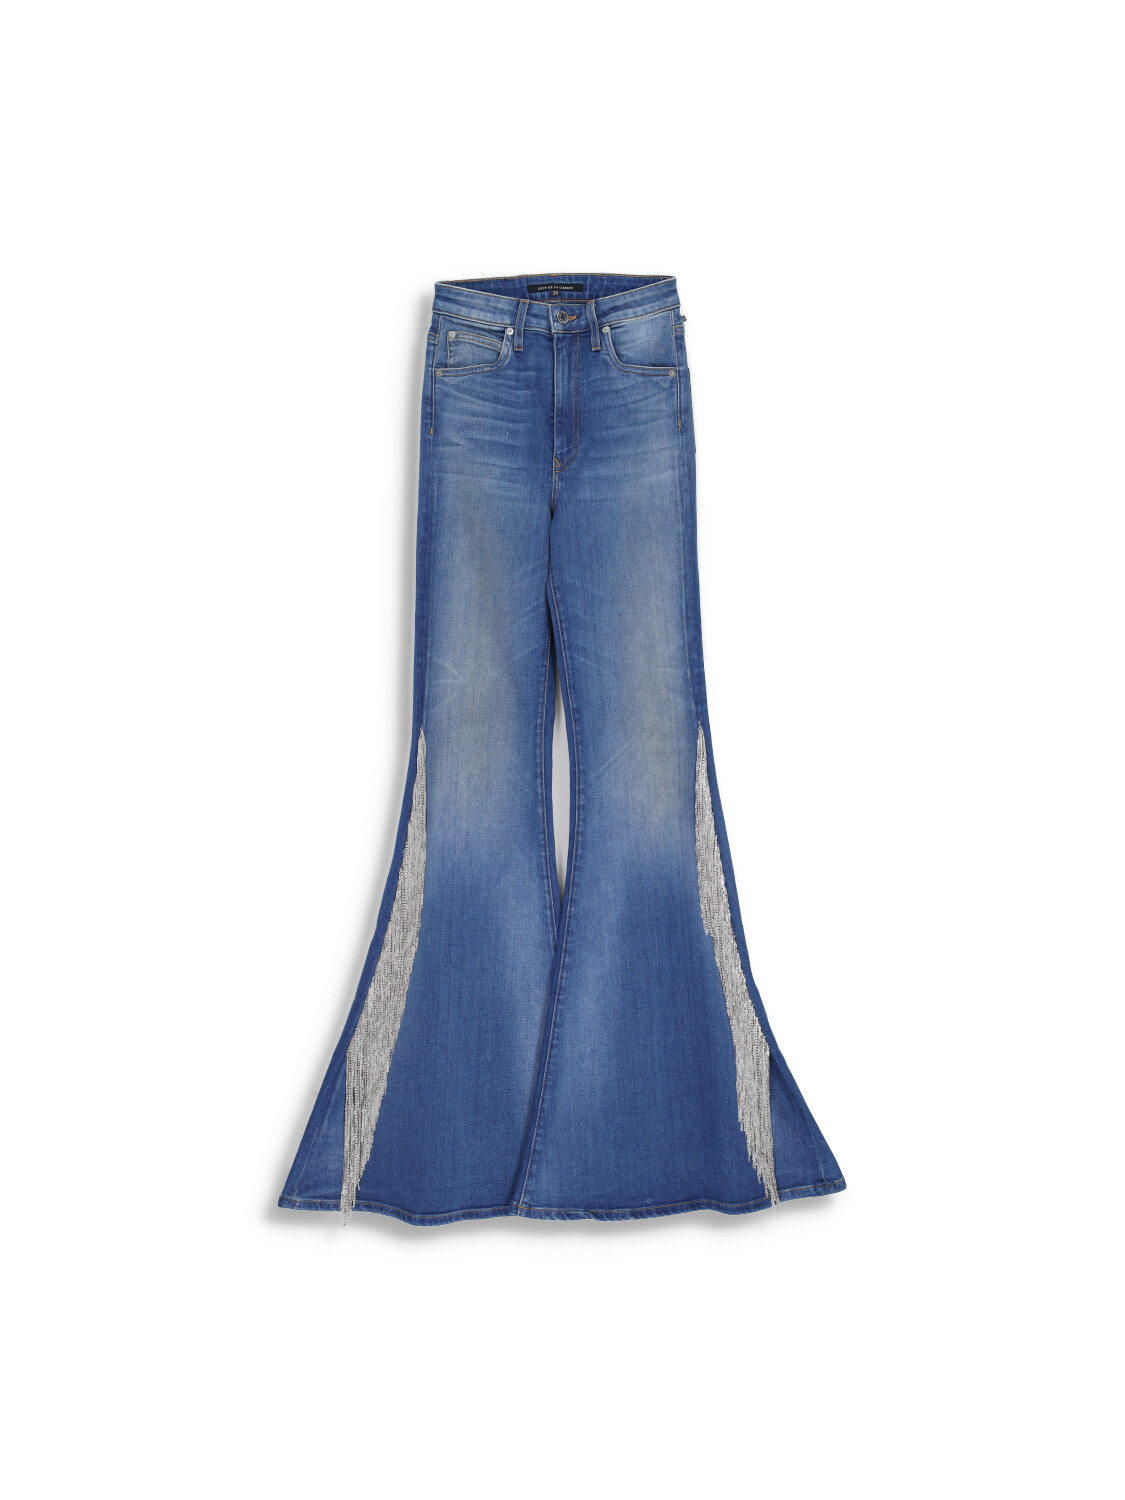 Heidi - low-waist denim flare pants with glitter fringe details